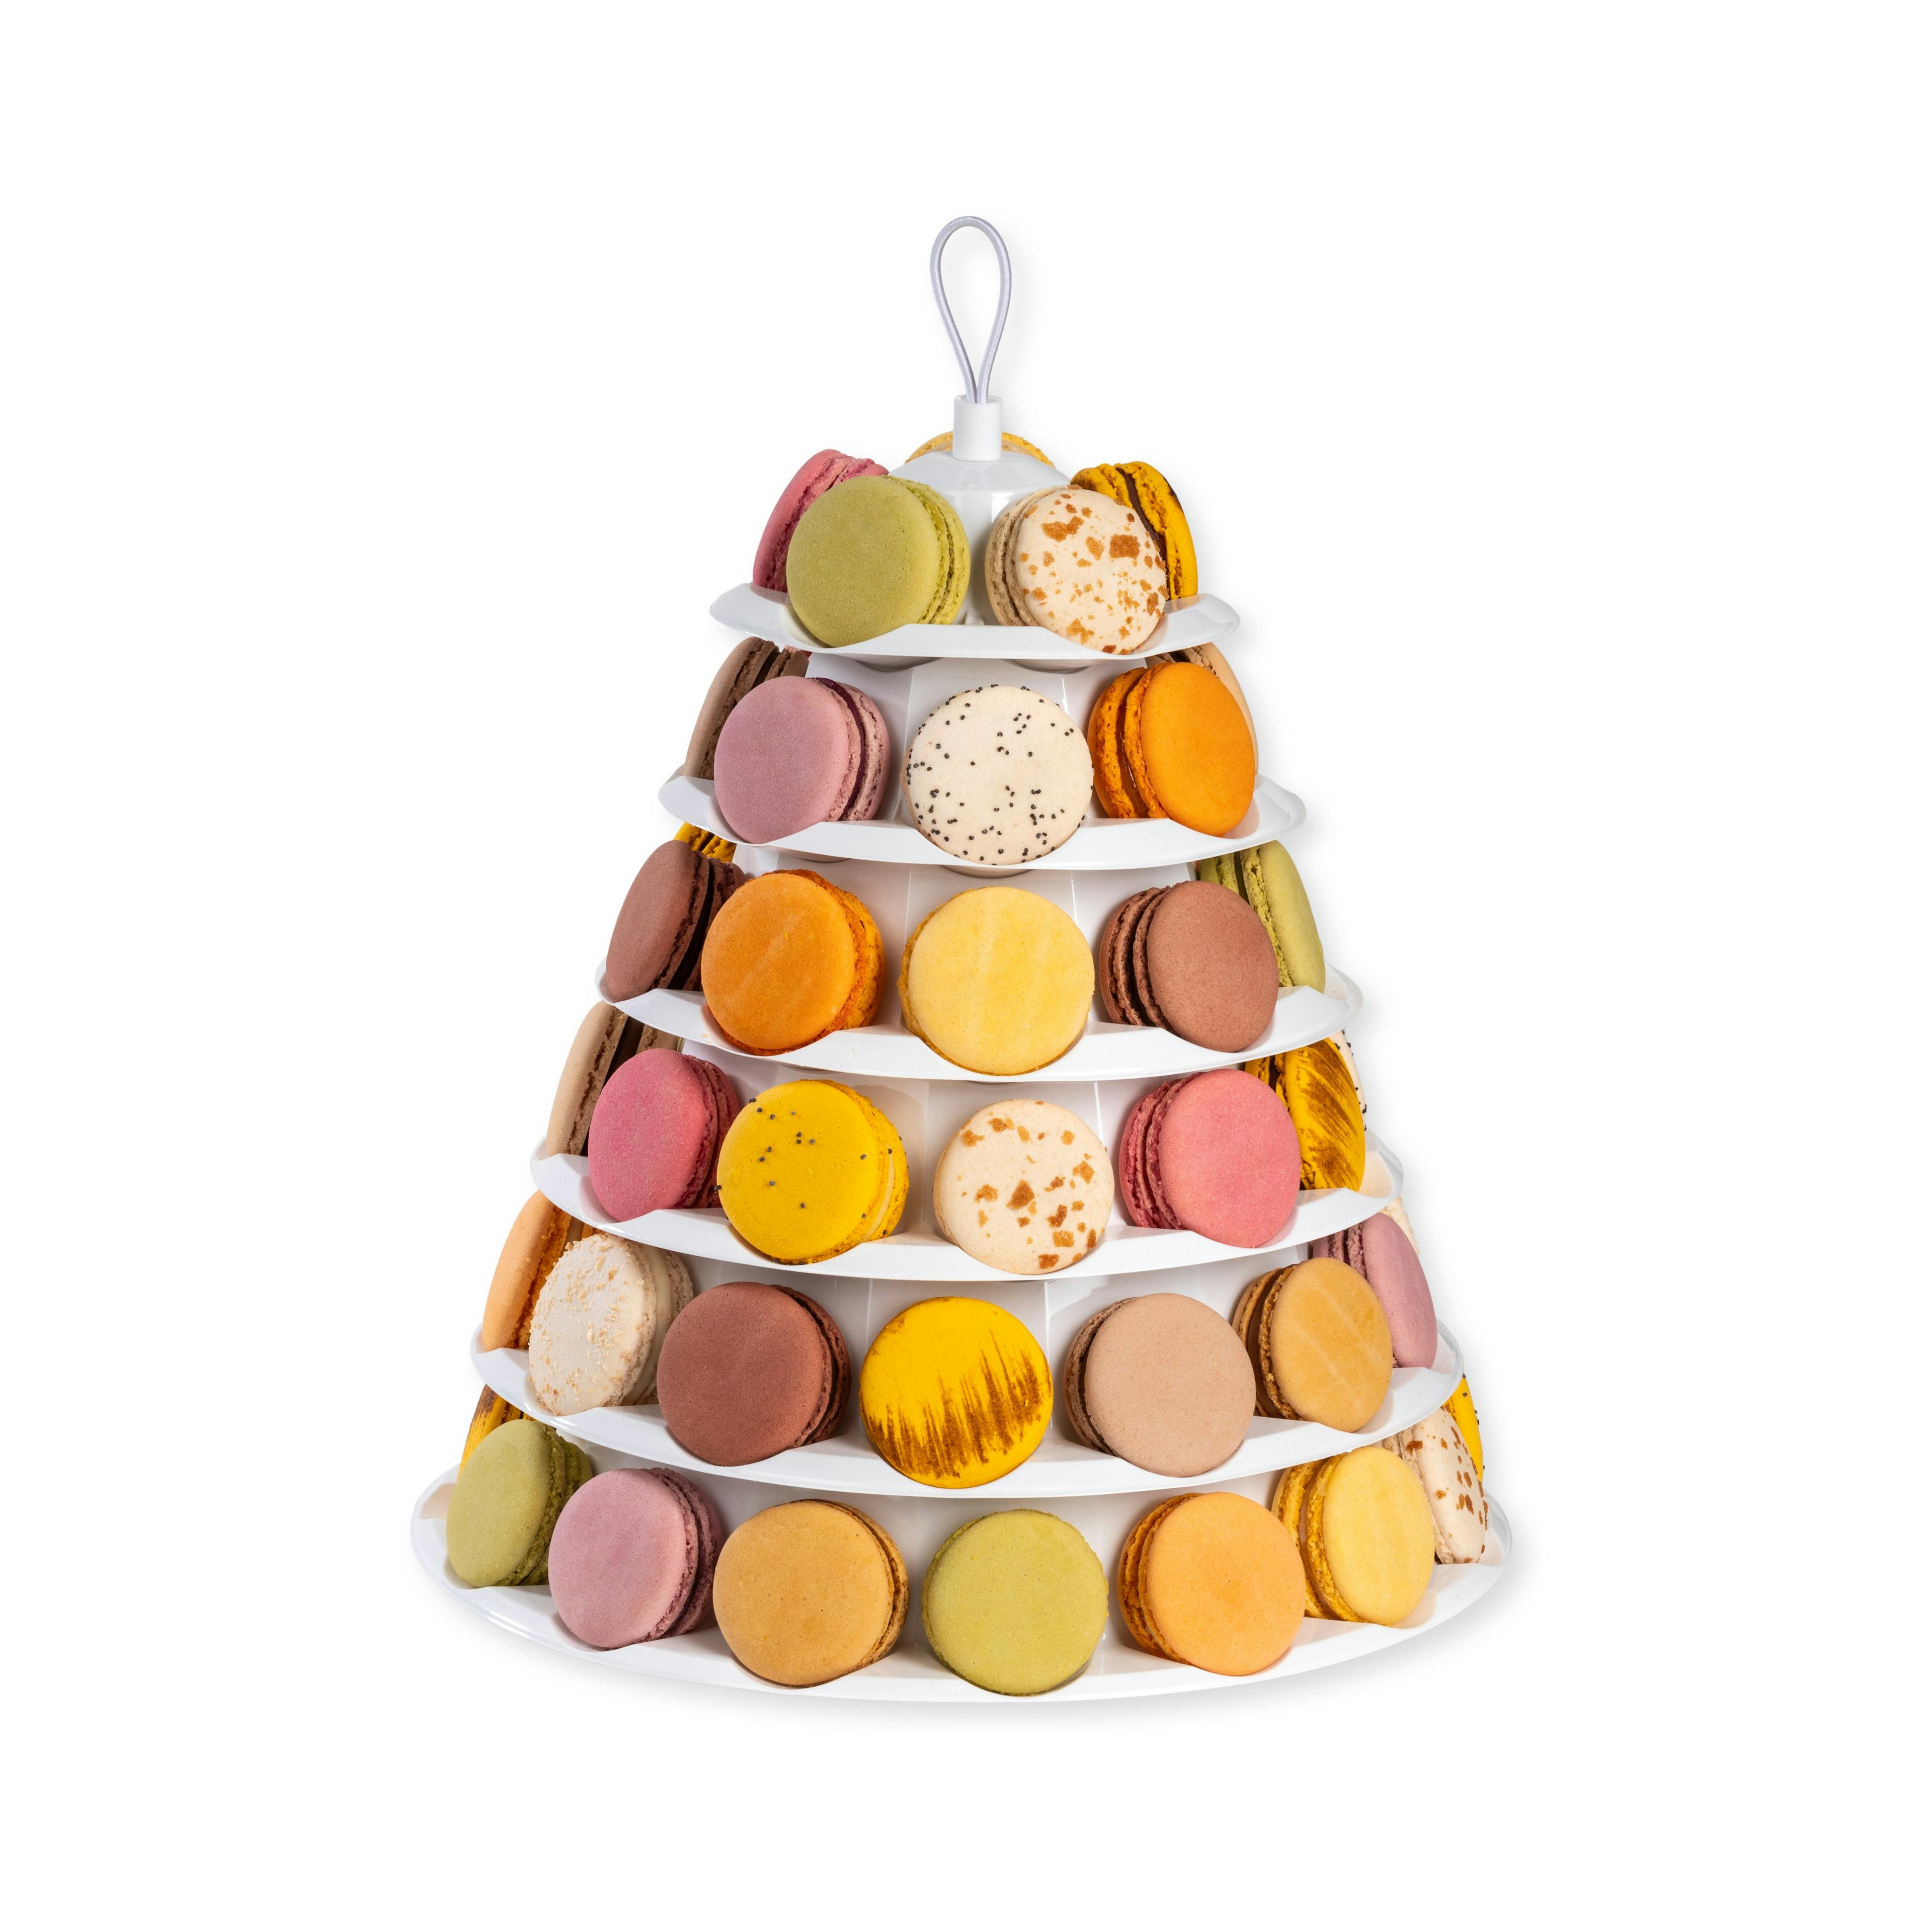 Pyramide macarons assortis - Vincent Vallée world champion chocolatier